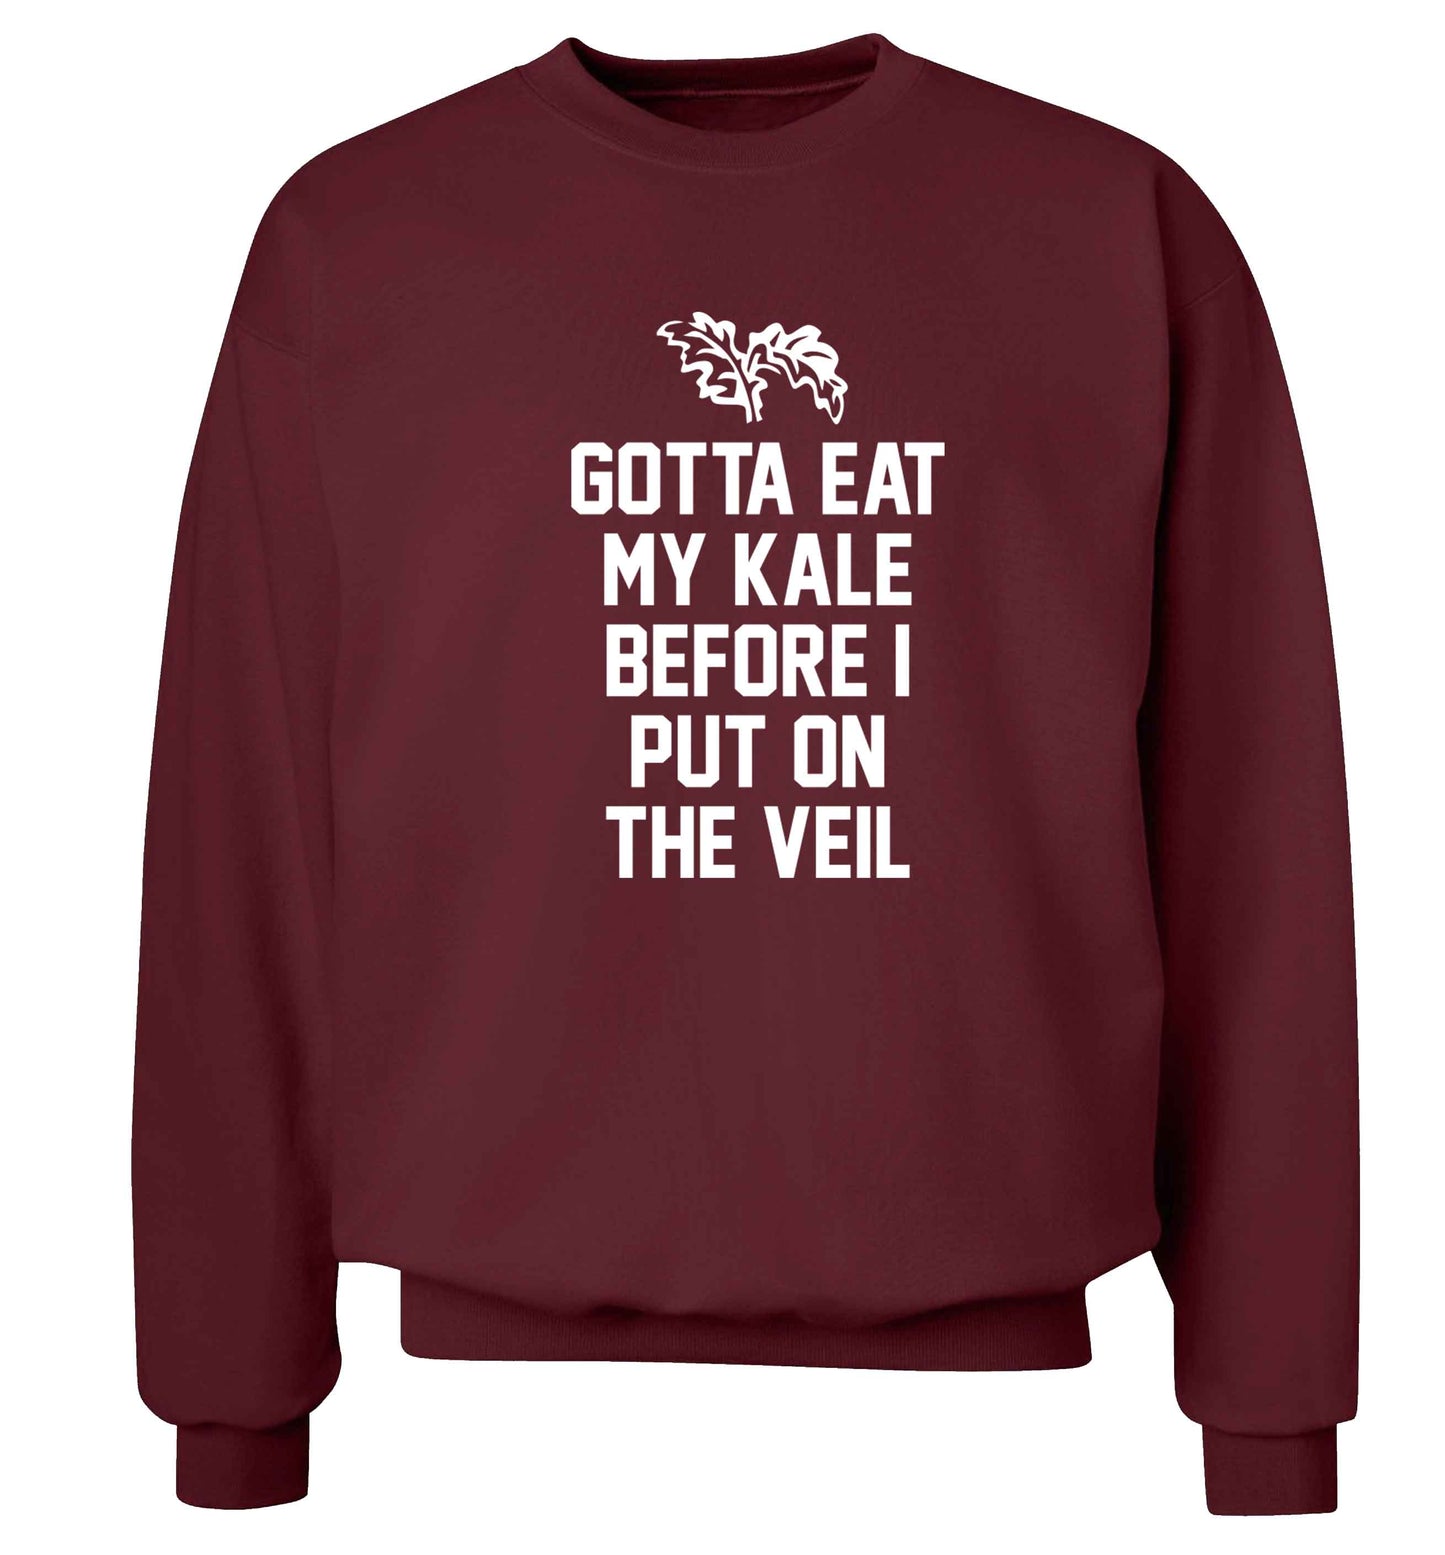 Gotta eat my kale before I put on the veil Adult's unisex maroon Sweater 2XL